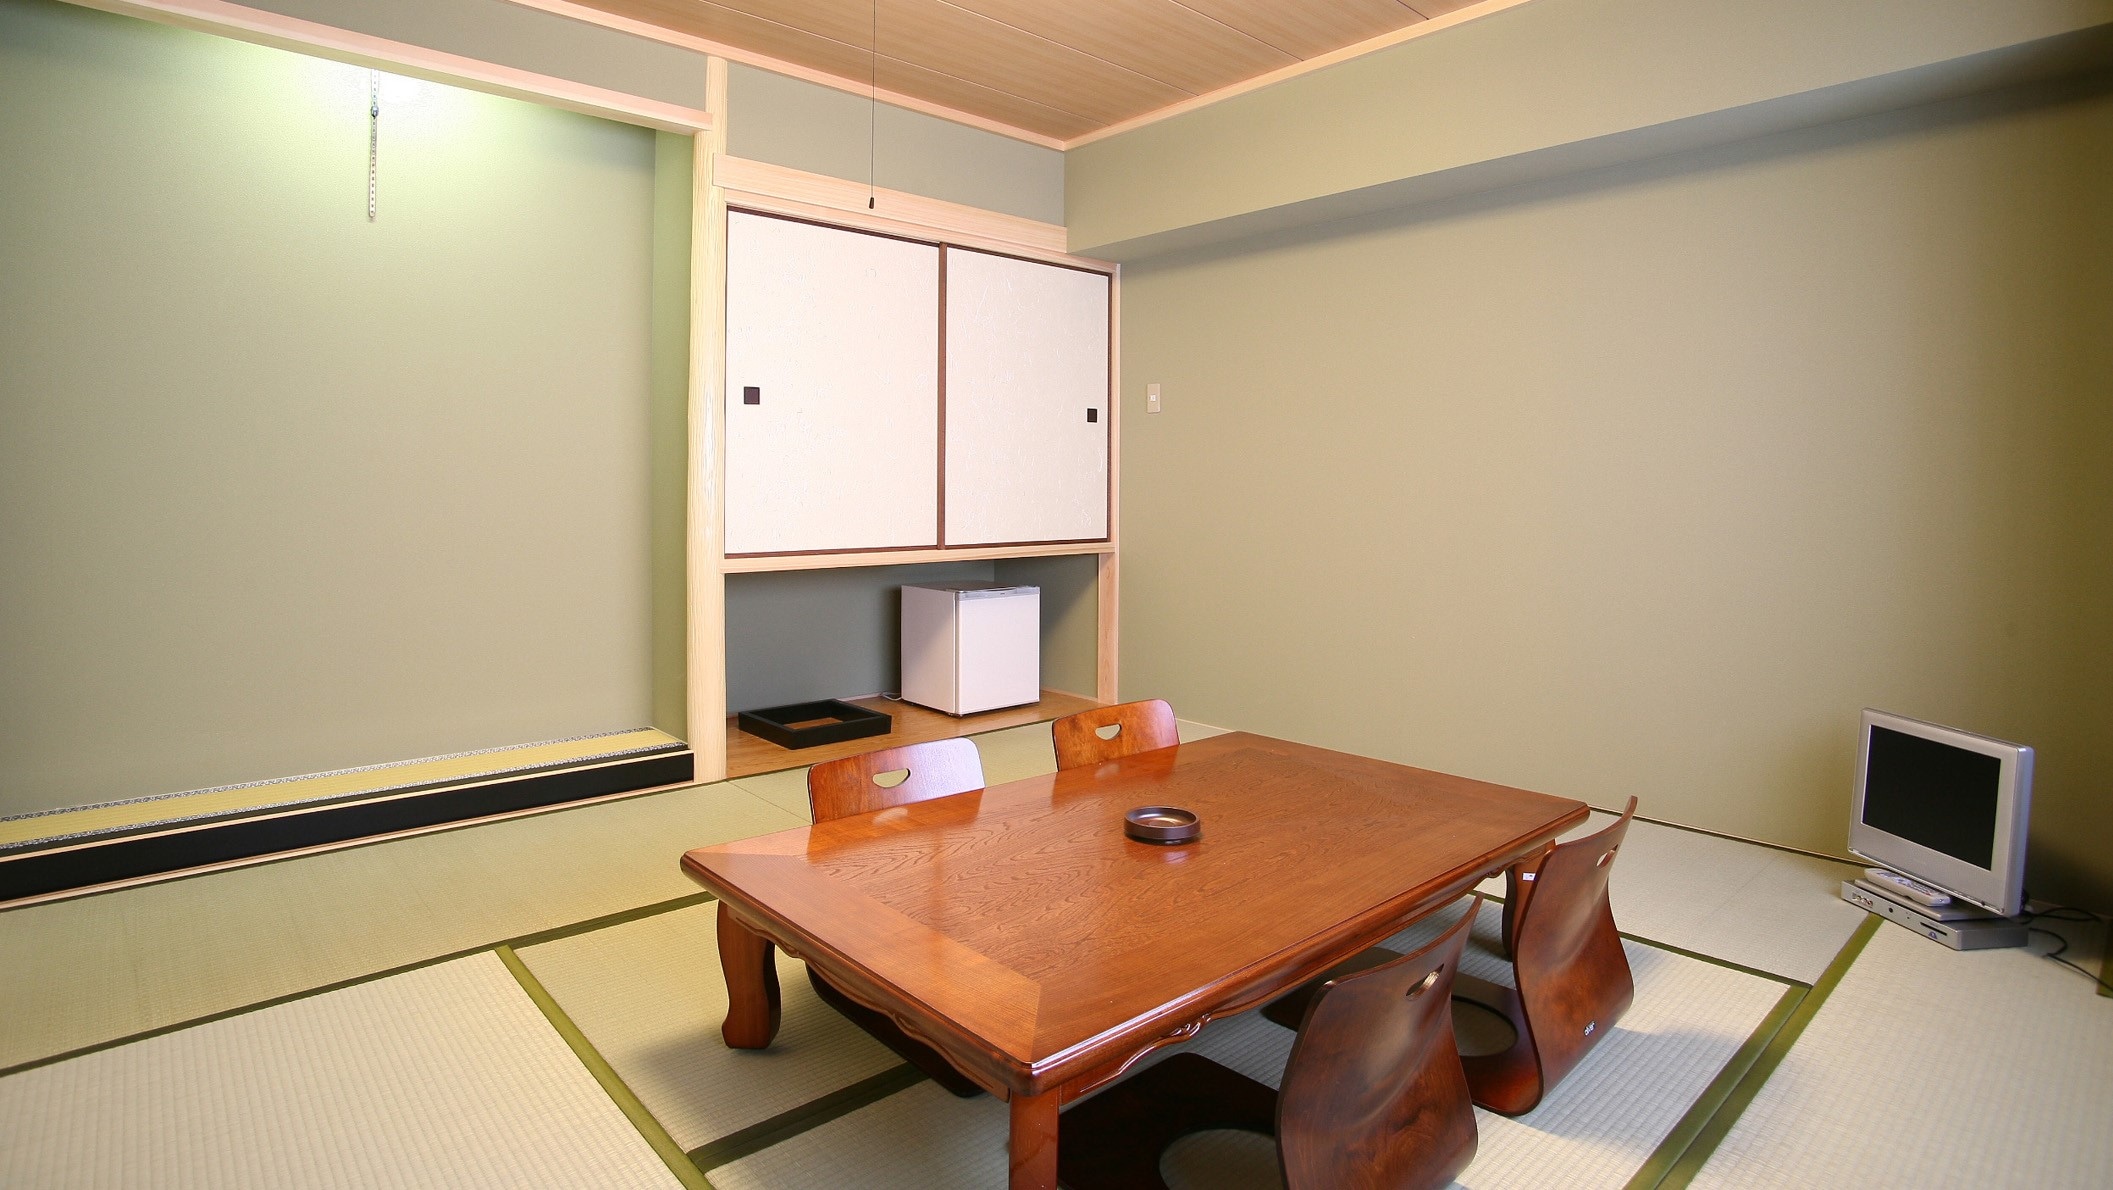 ◆ Japanese-style room 8 tatami mats